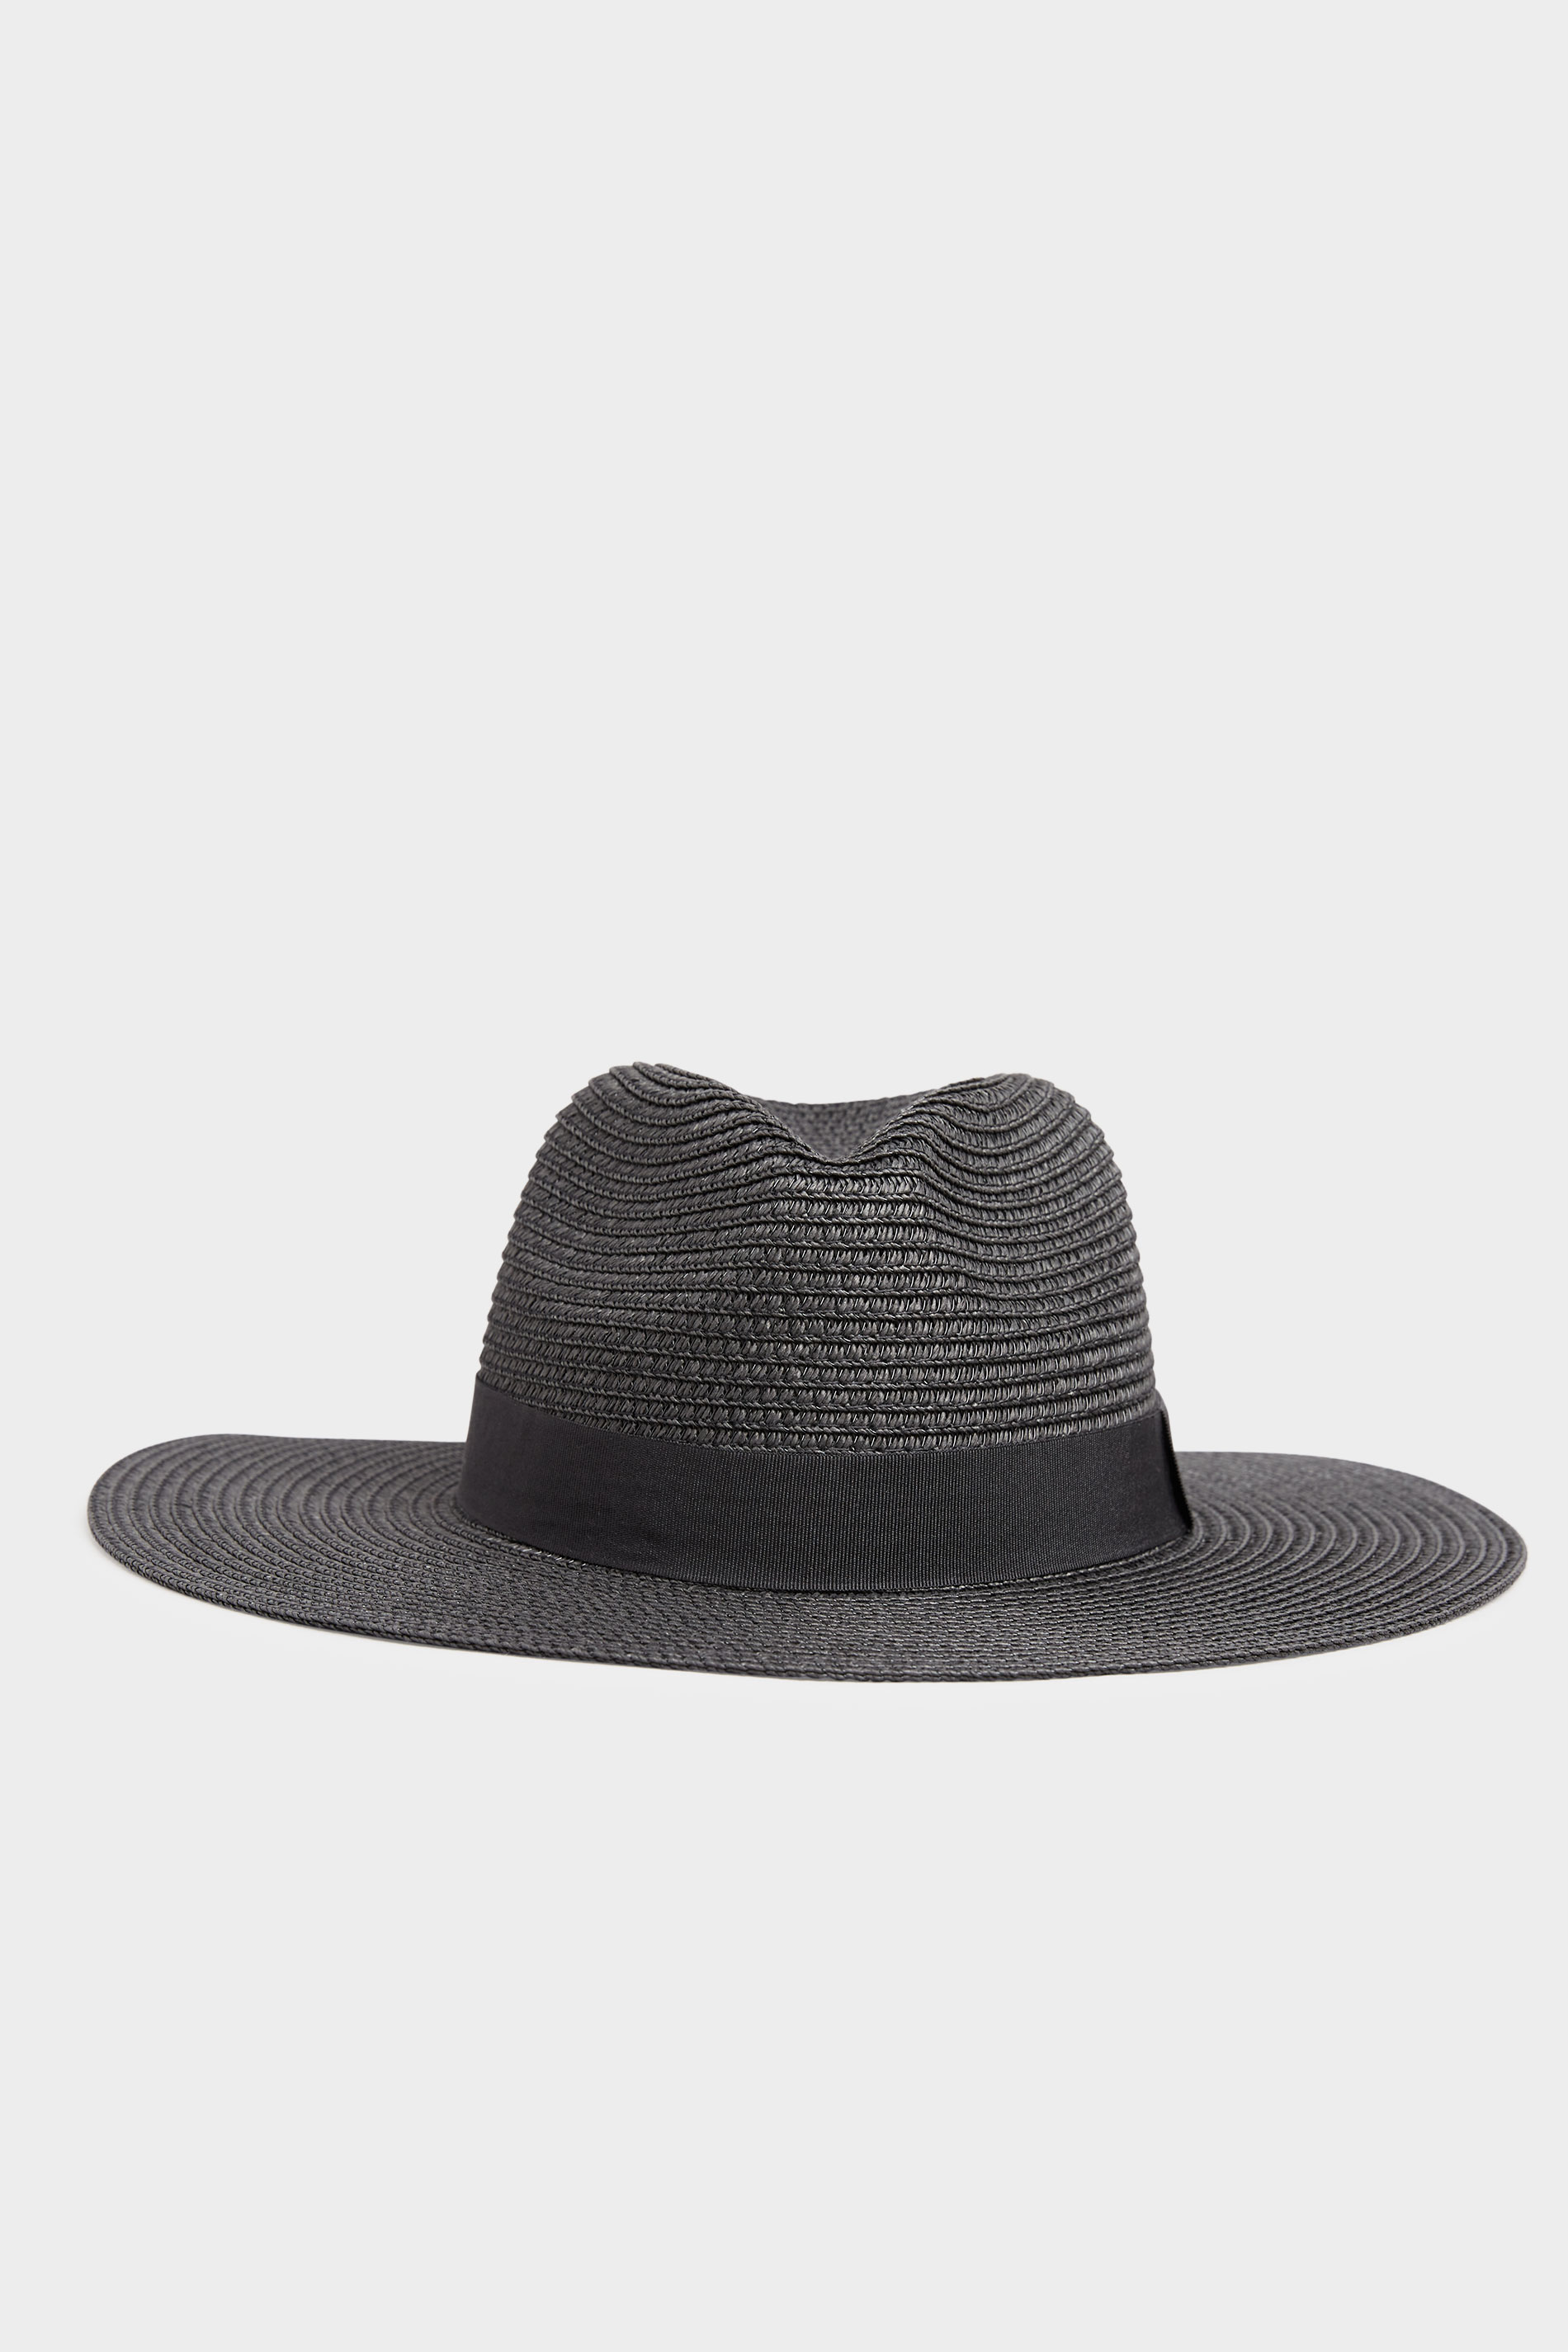 Black Straw Fedora Hat | Yours Clothing  1